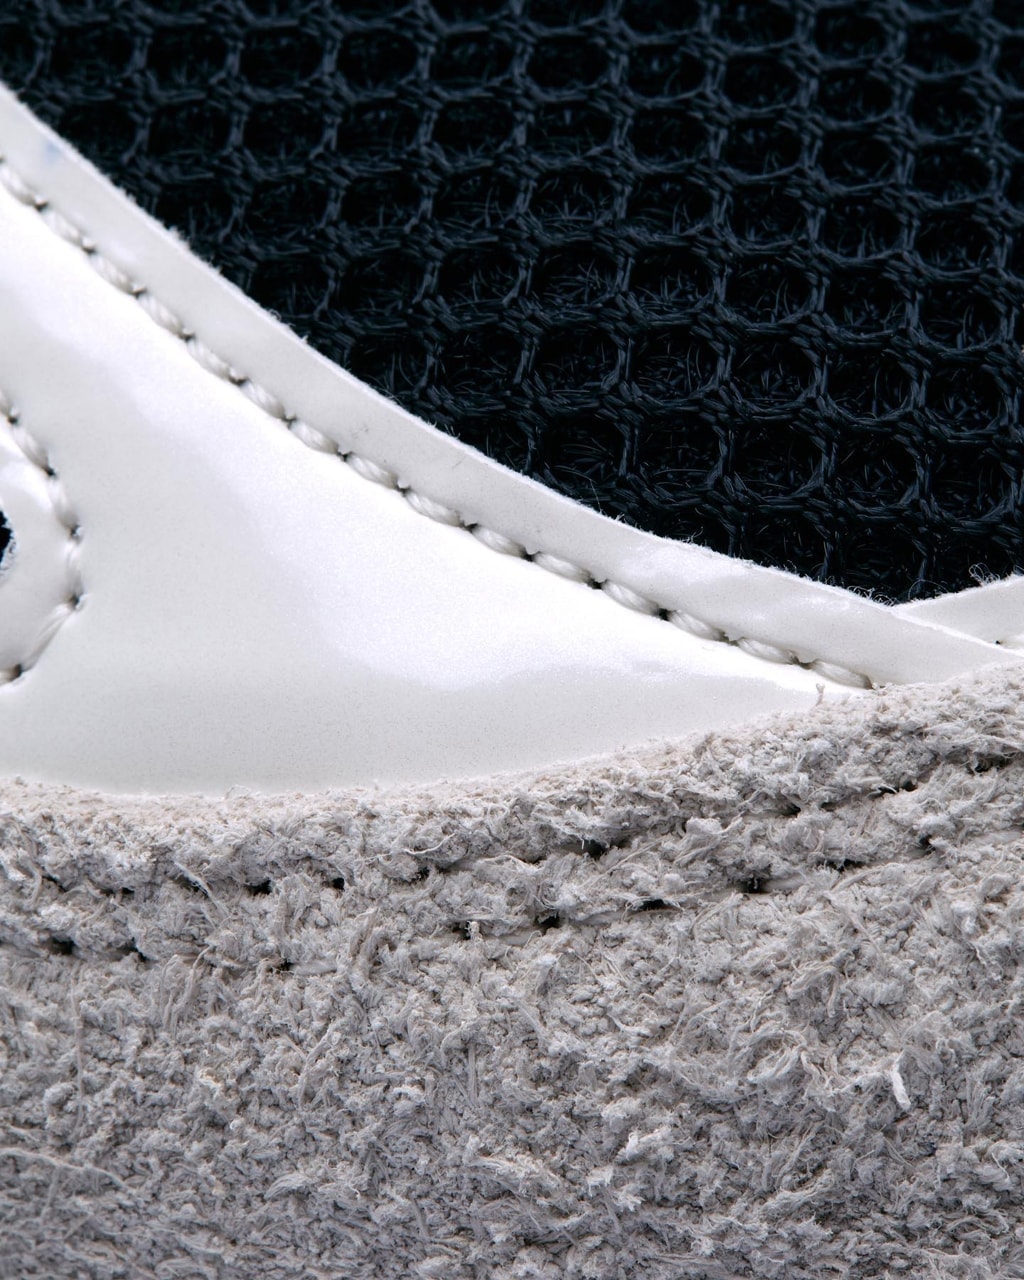 Joe Freshgoods x New Balance 990v4 最新聯名鞋款正式發佈